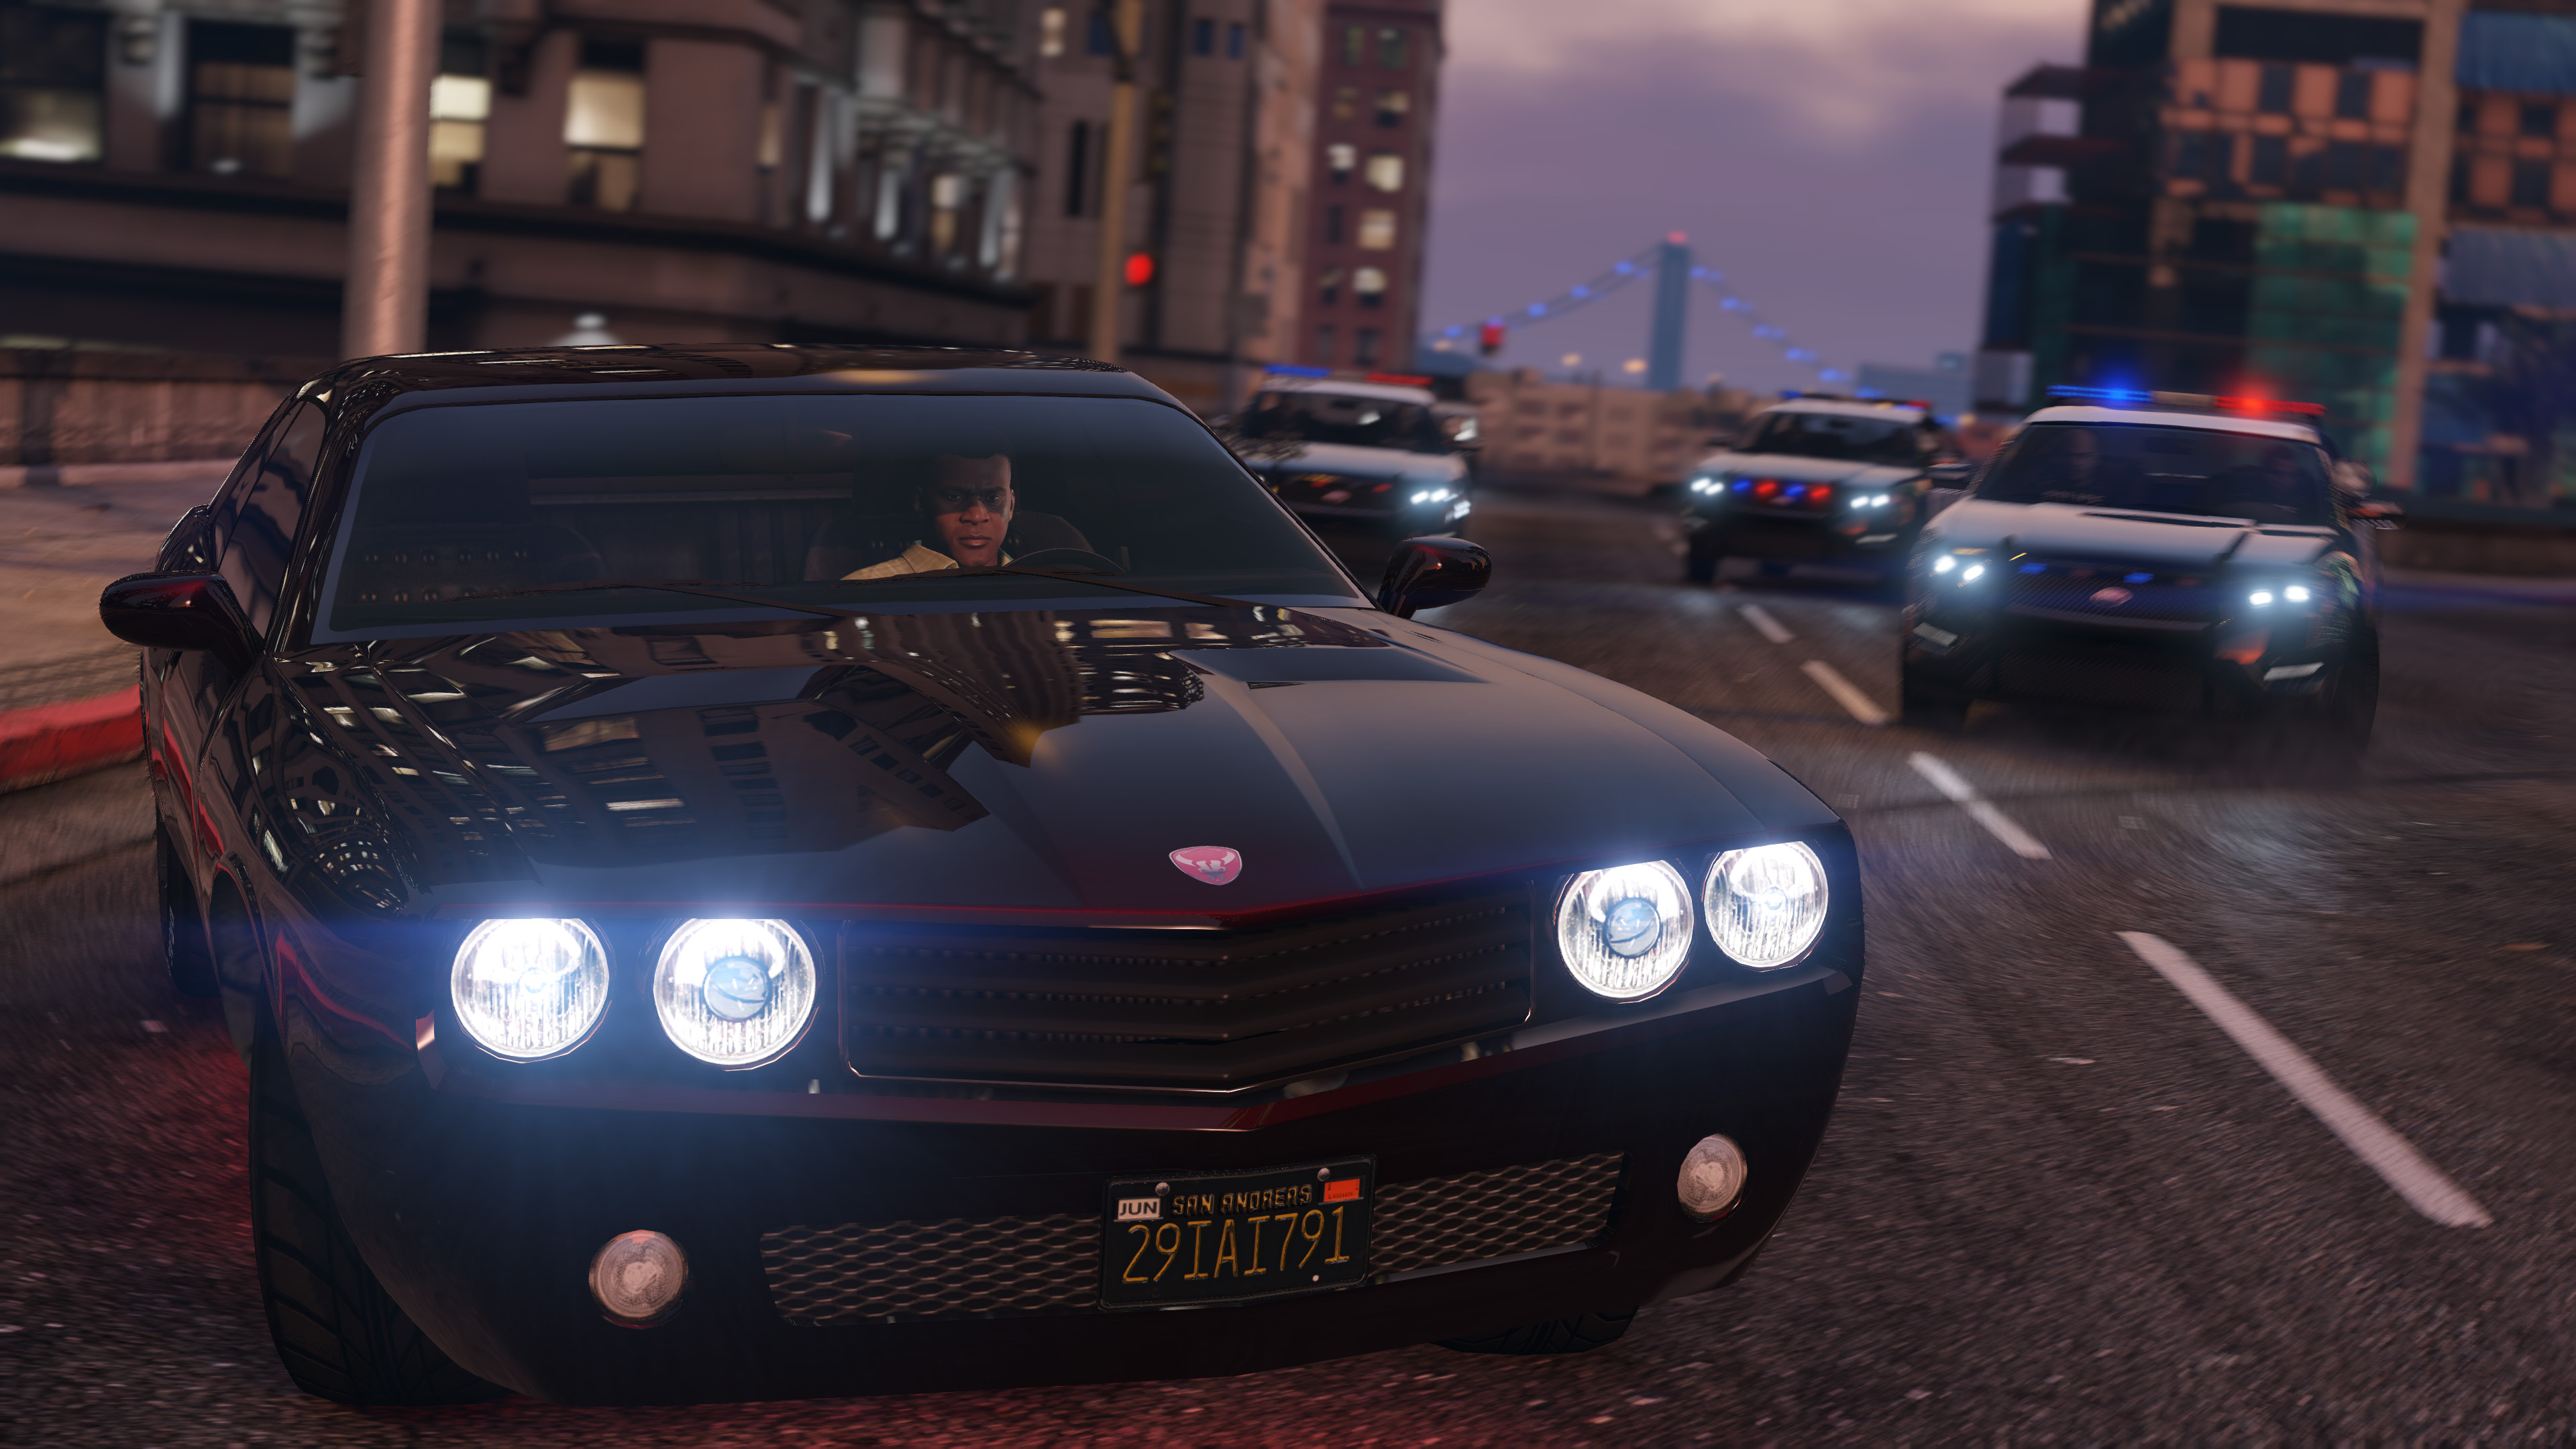 GTA thrill, Fast cars, Dangerous missions, Open-world chaos, 3840x2160 4K Desktop